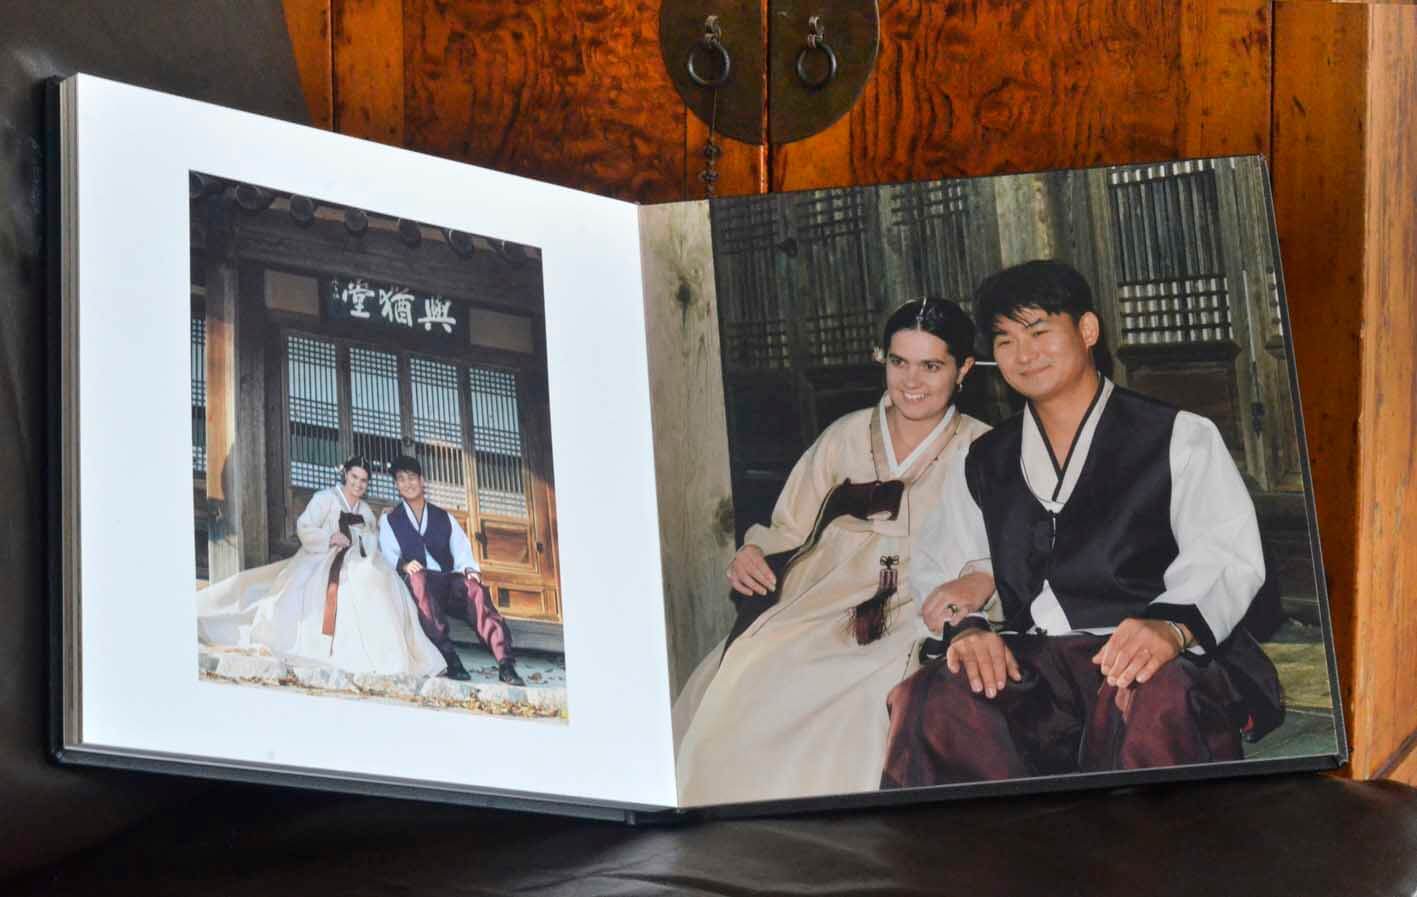 Lee Korean prewedding photobook